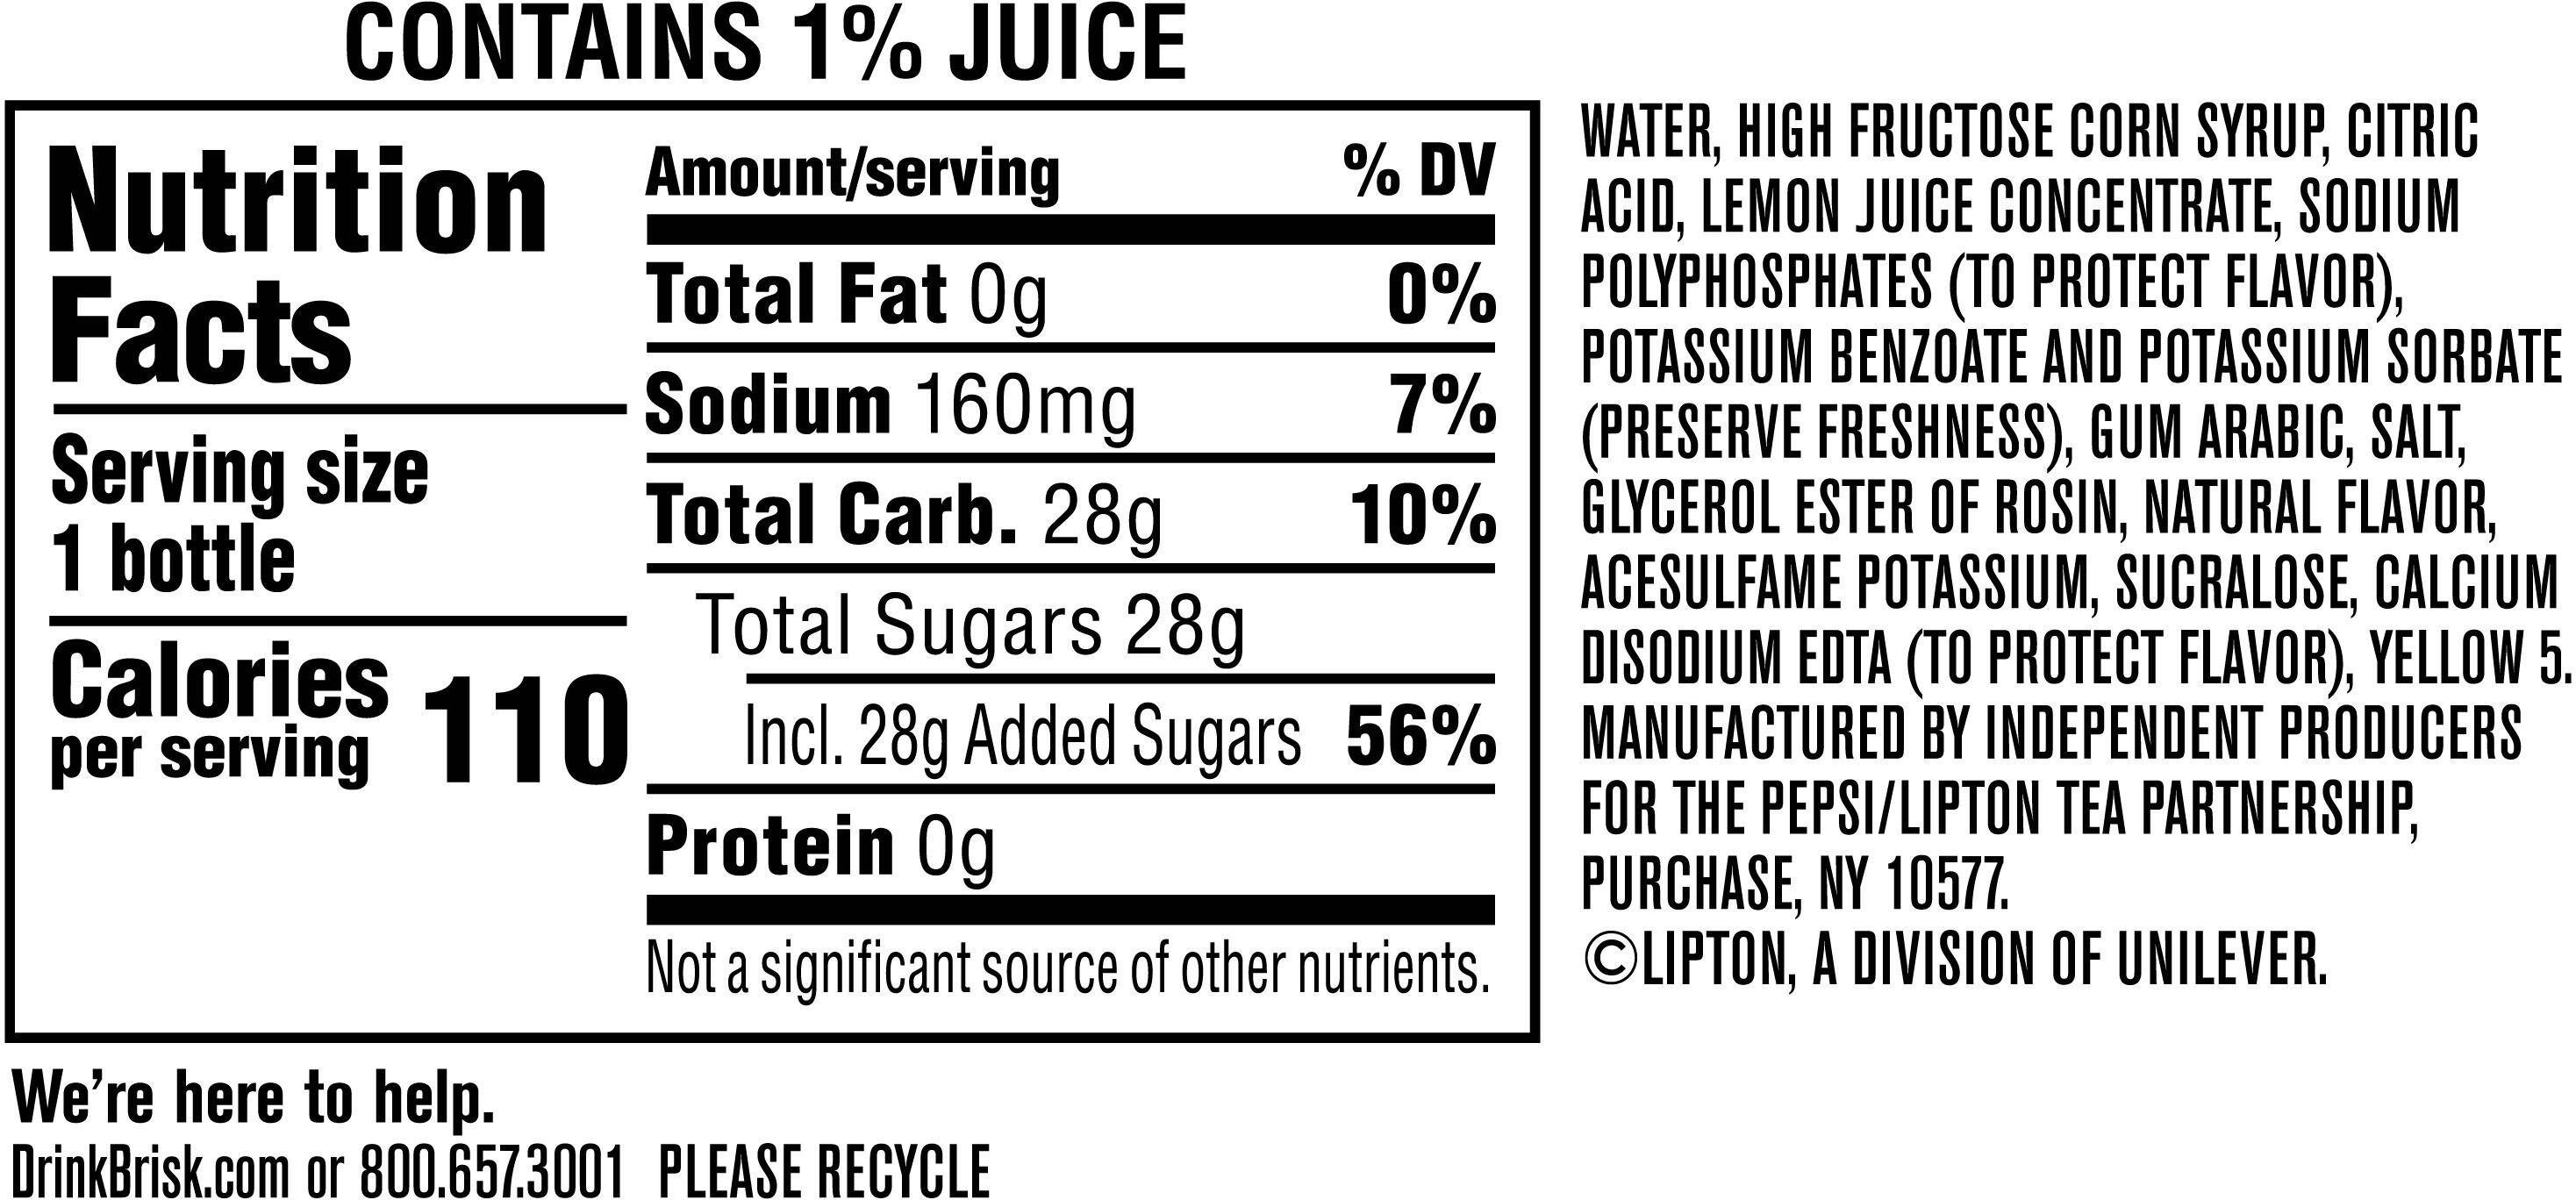 Image describing nutrition information for product Brisk Lemonade